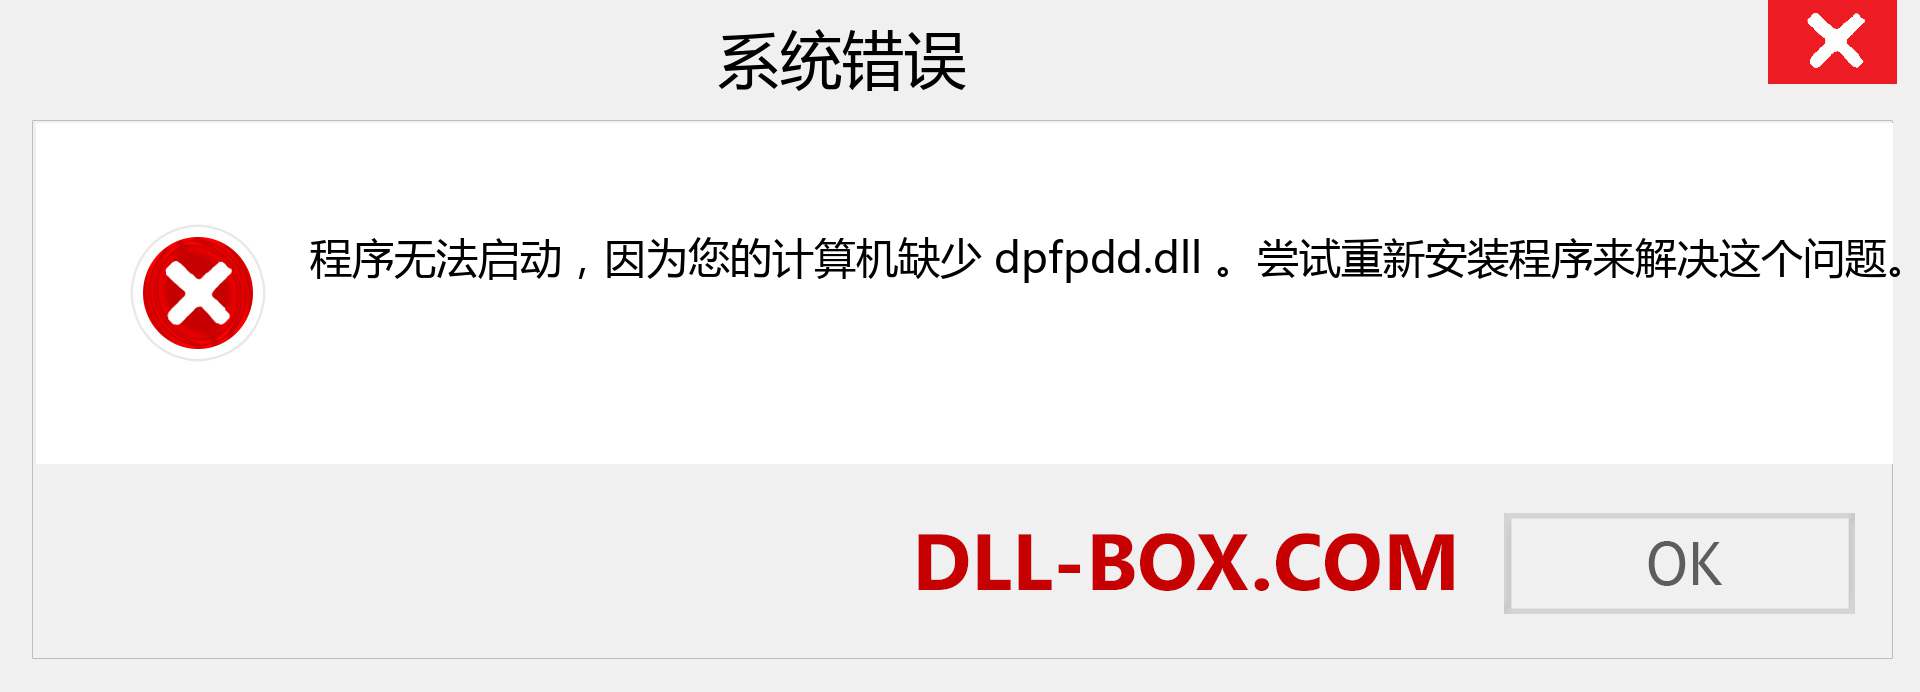 dpfpdd.dll 文件丢失？。 适用于 Windows 7、8、10 的下载 - 修复 Windows、照片、图像上的 dpfpdd dll 丢失错误